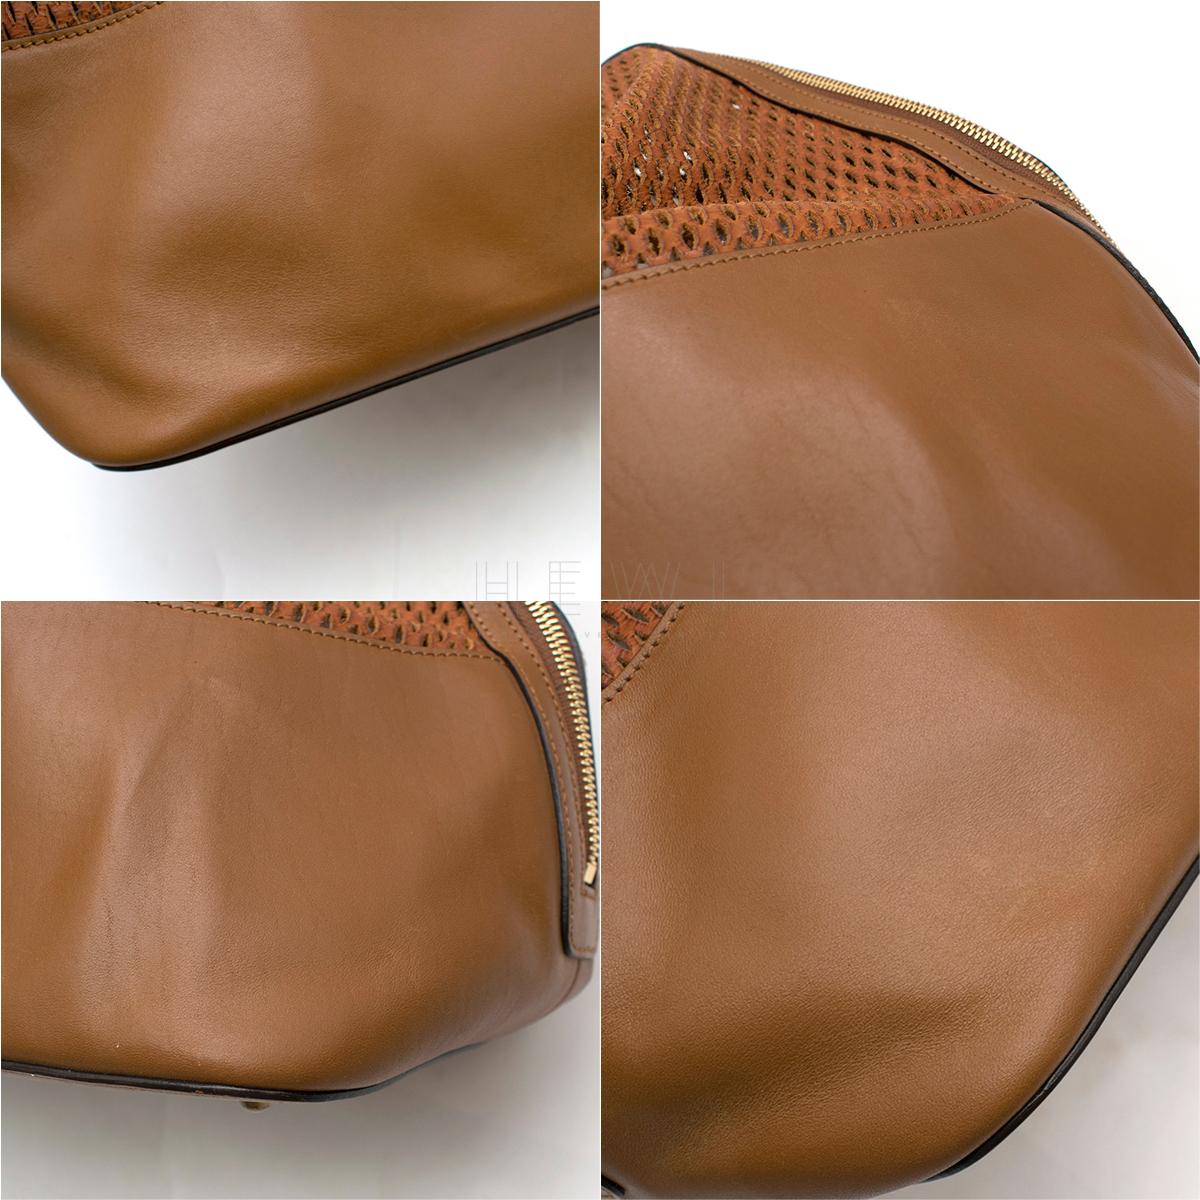 Chloe Laser Cut Leather Tan-Brown Tote Bag SIZE M 2